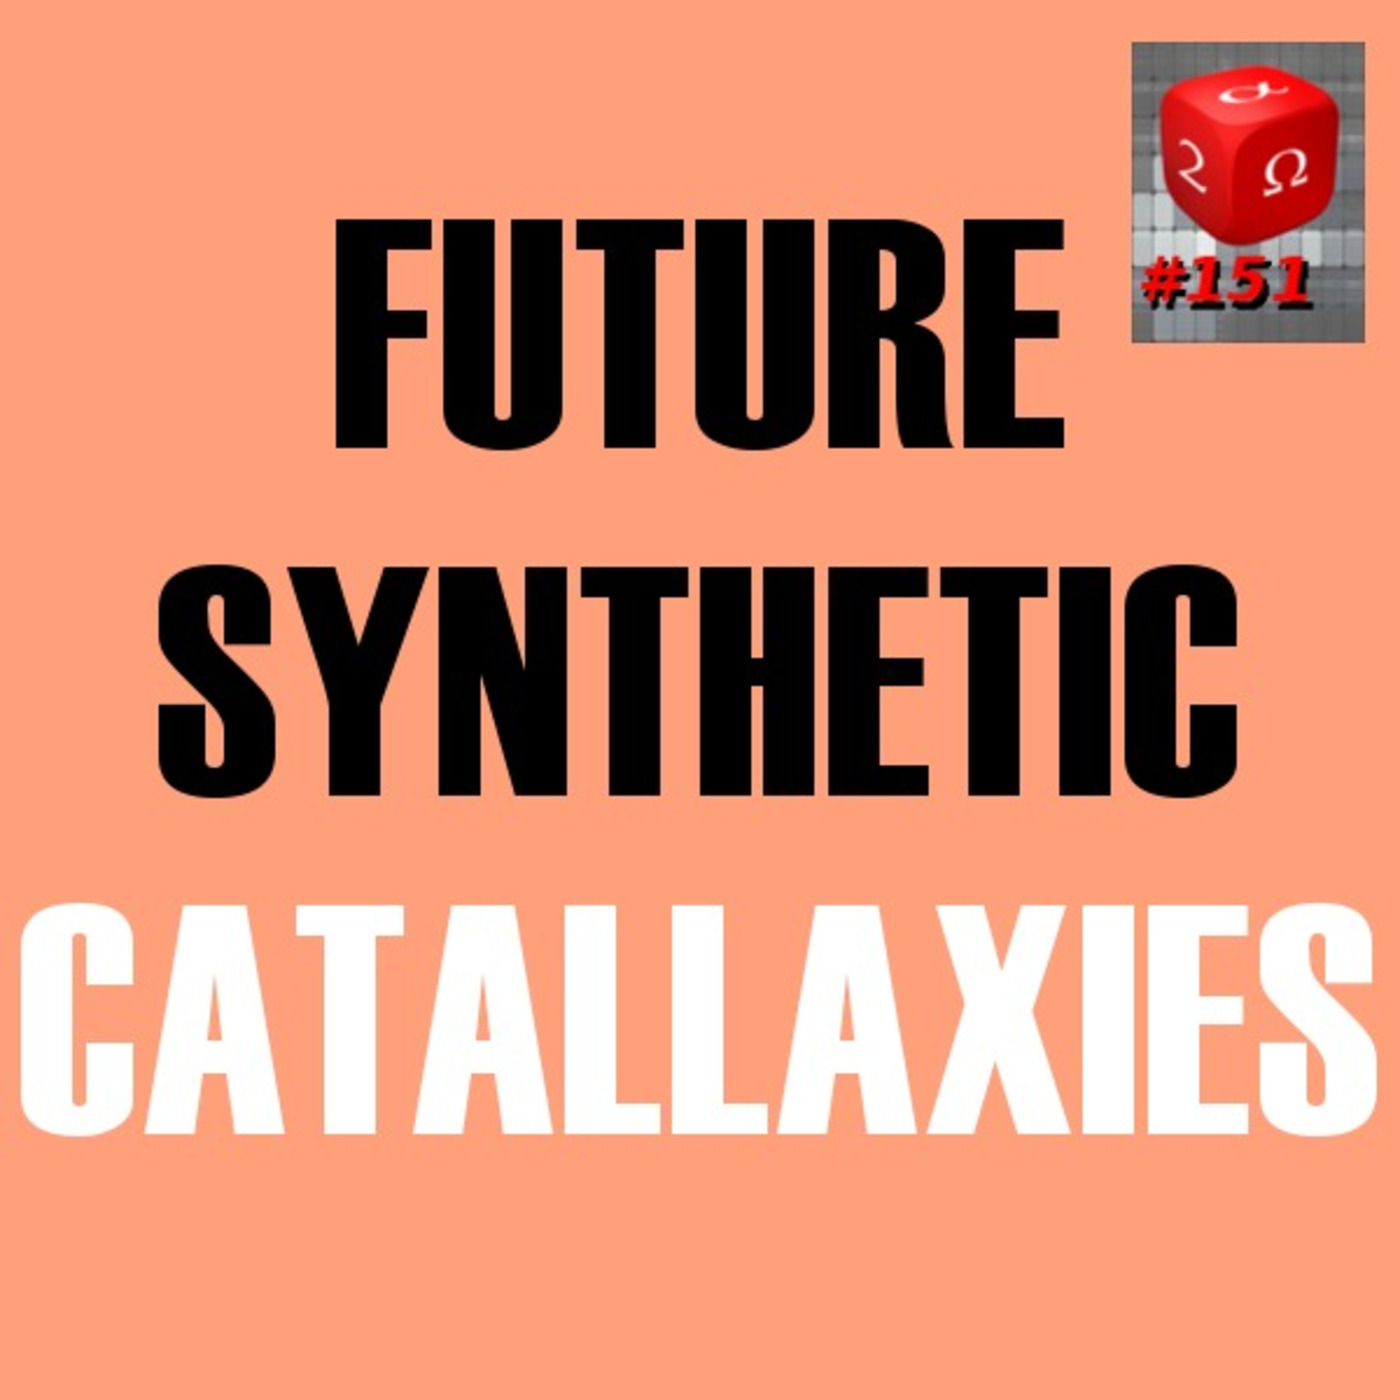 Episode 229: #151 Future Synthetic Catallaxies Pt 2 - TEASER